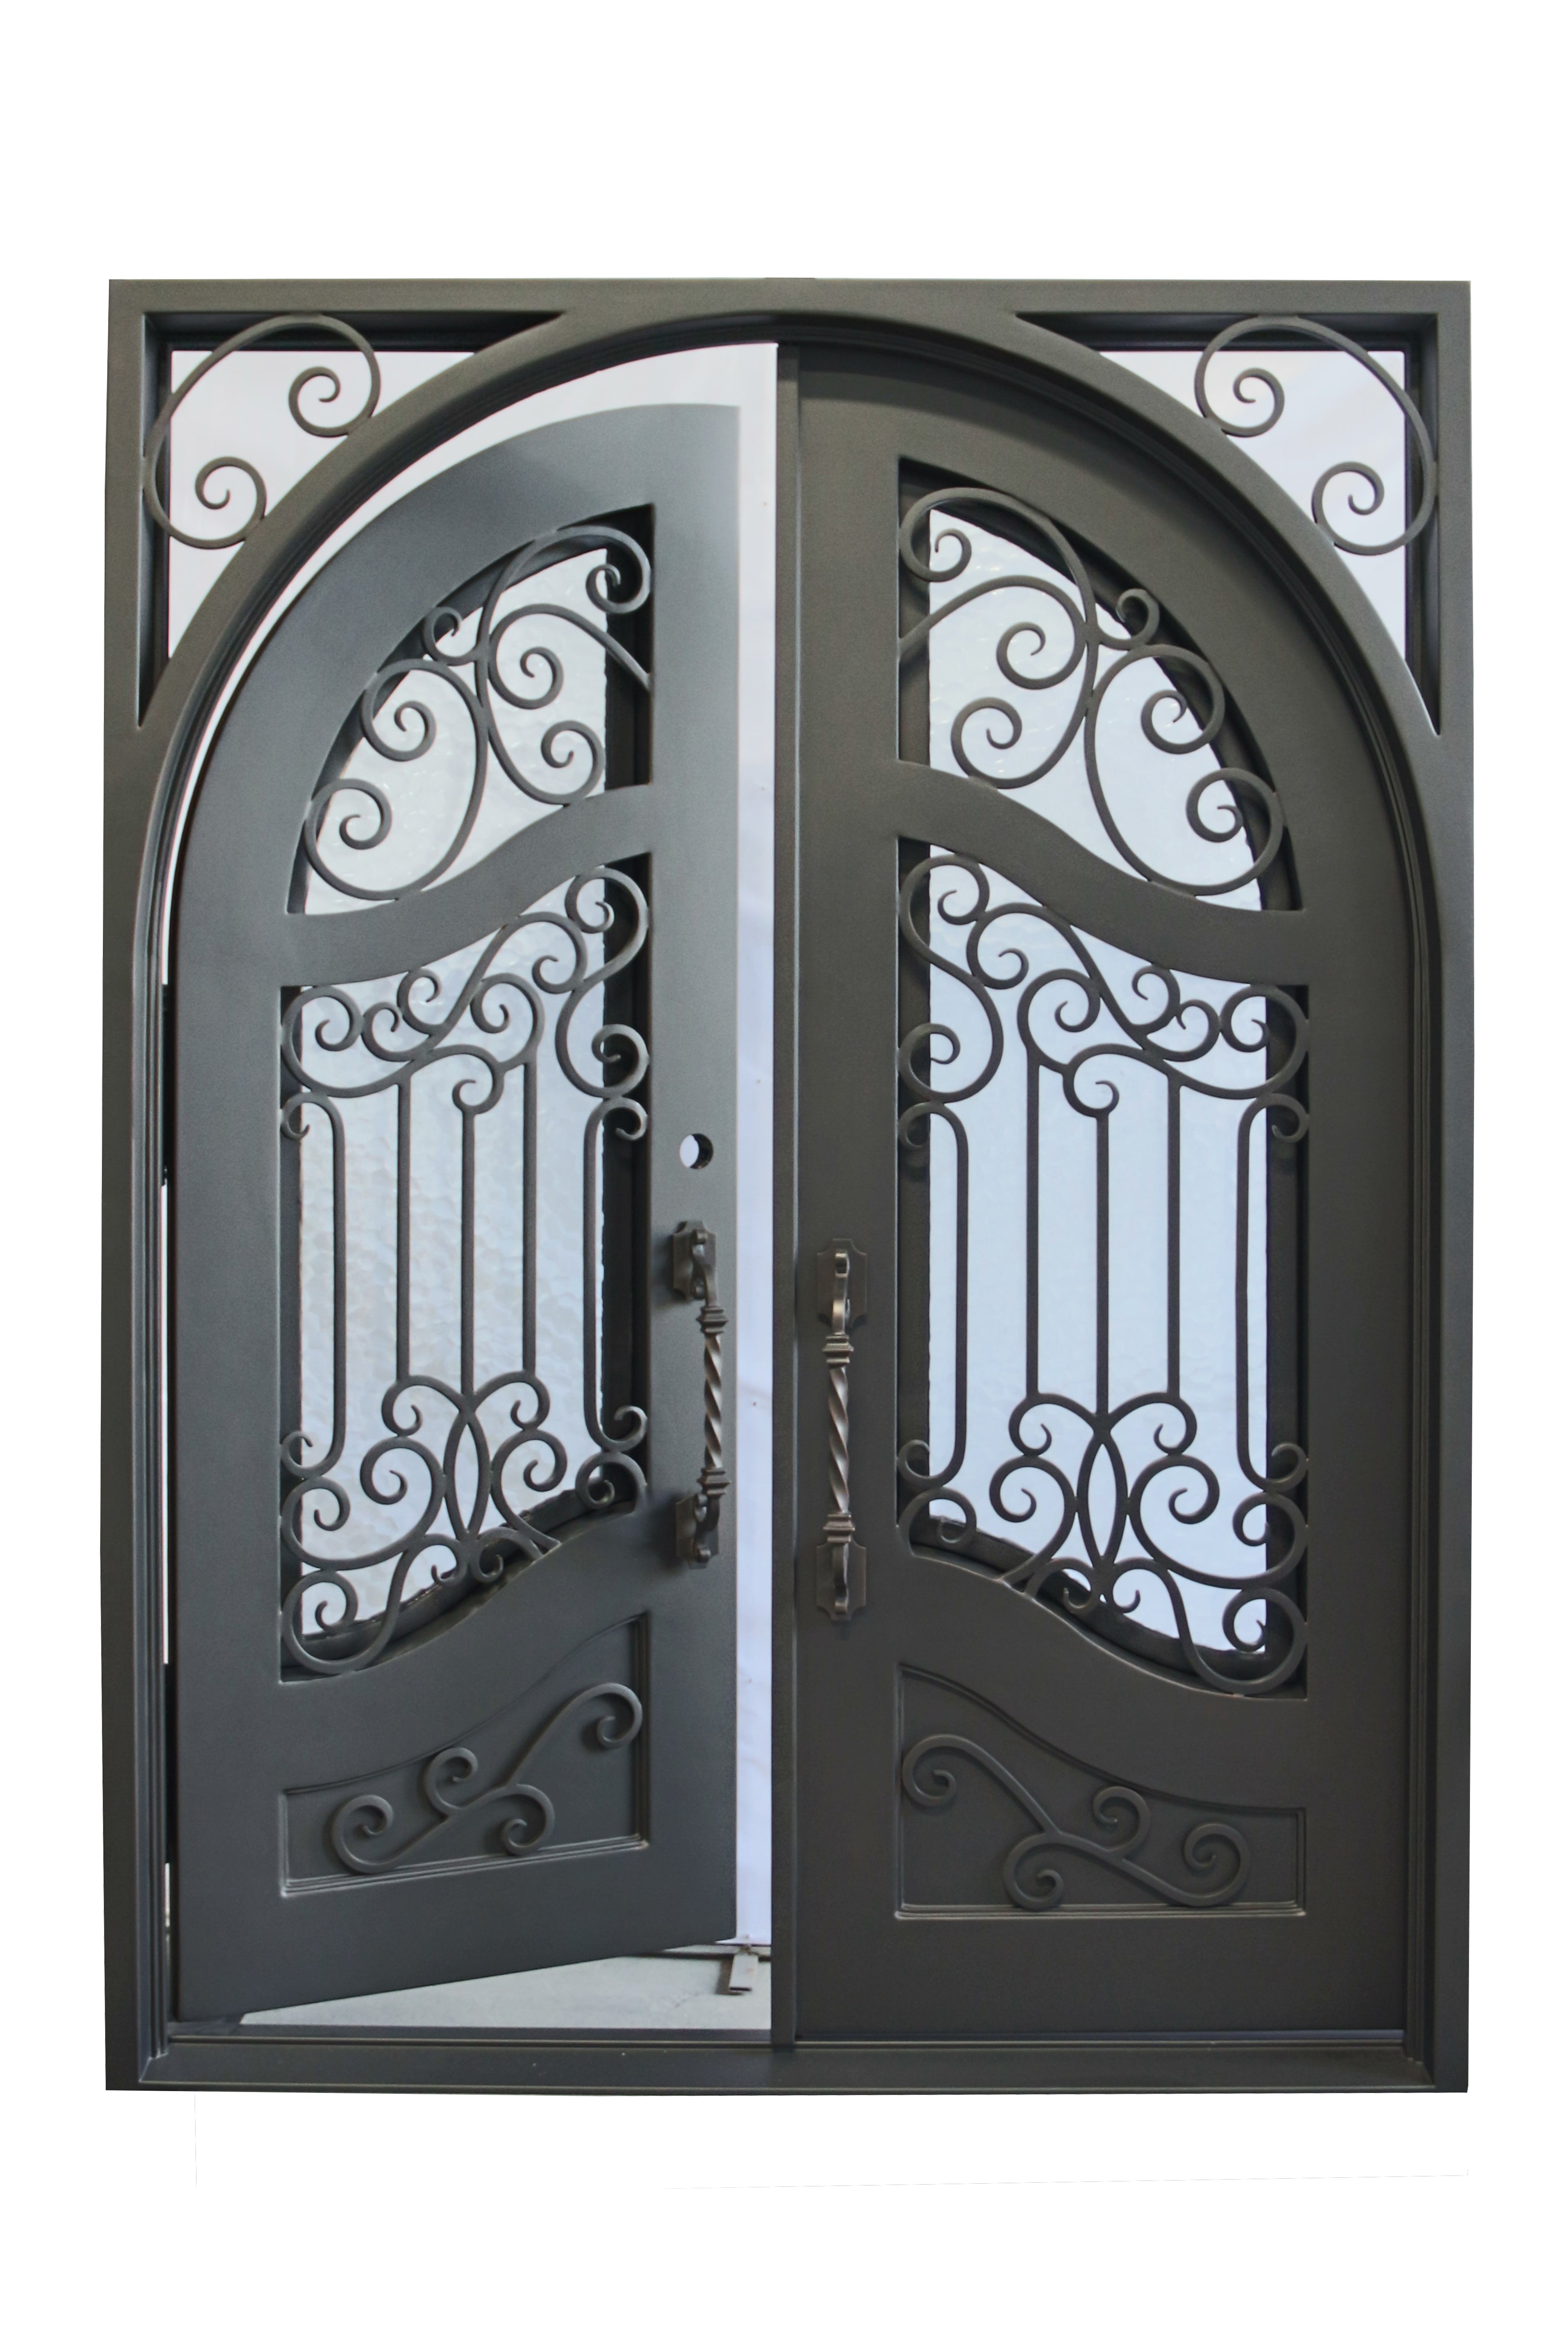 Calvert Model Double Front Entry Iron Door With Tempered Water Cube Glass Dark Bronze Finish - AAWAIZ IMPORTS